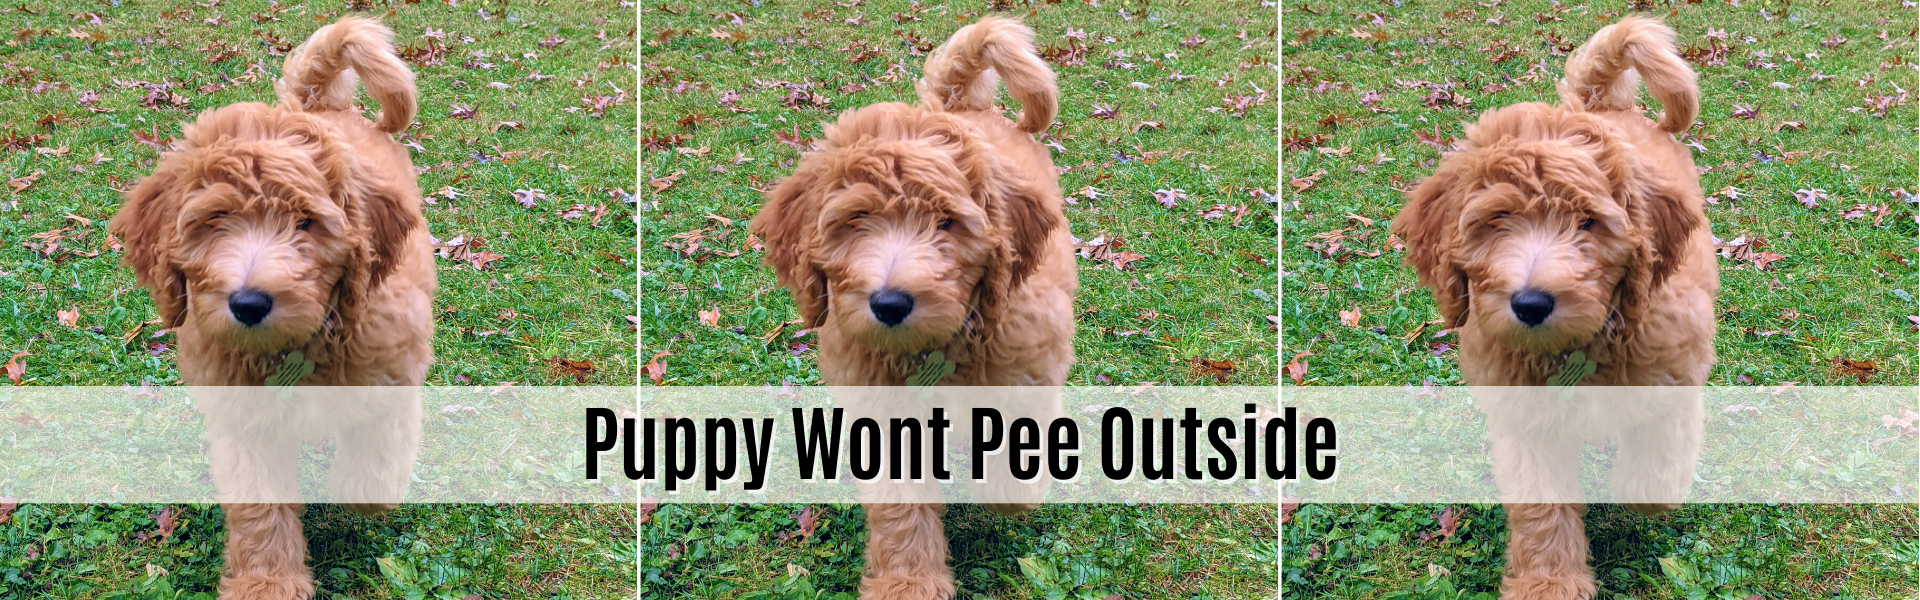 puppy wont pee outside